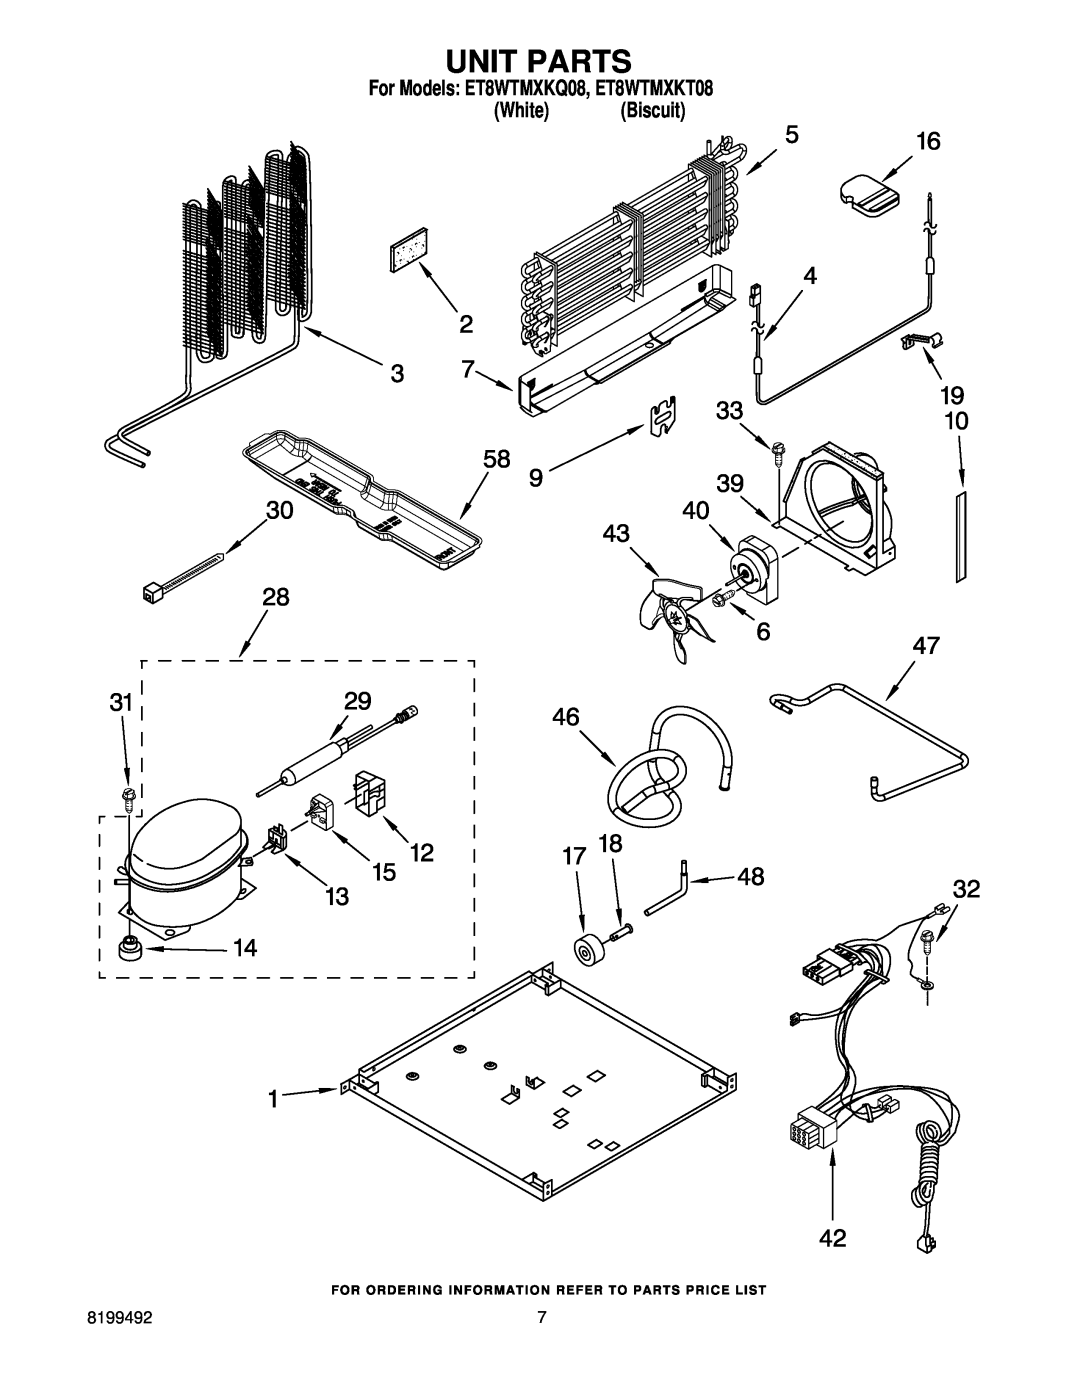 Whirlpool manual Unit Parts, For Models ET8WTMXKQ08, ET8WTMXKT08, White Biscuit 